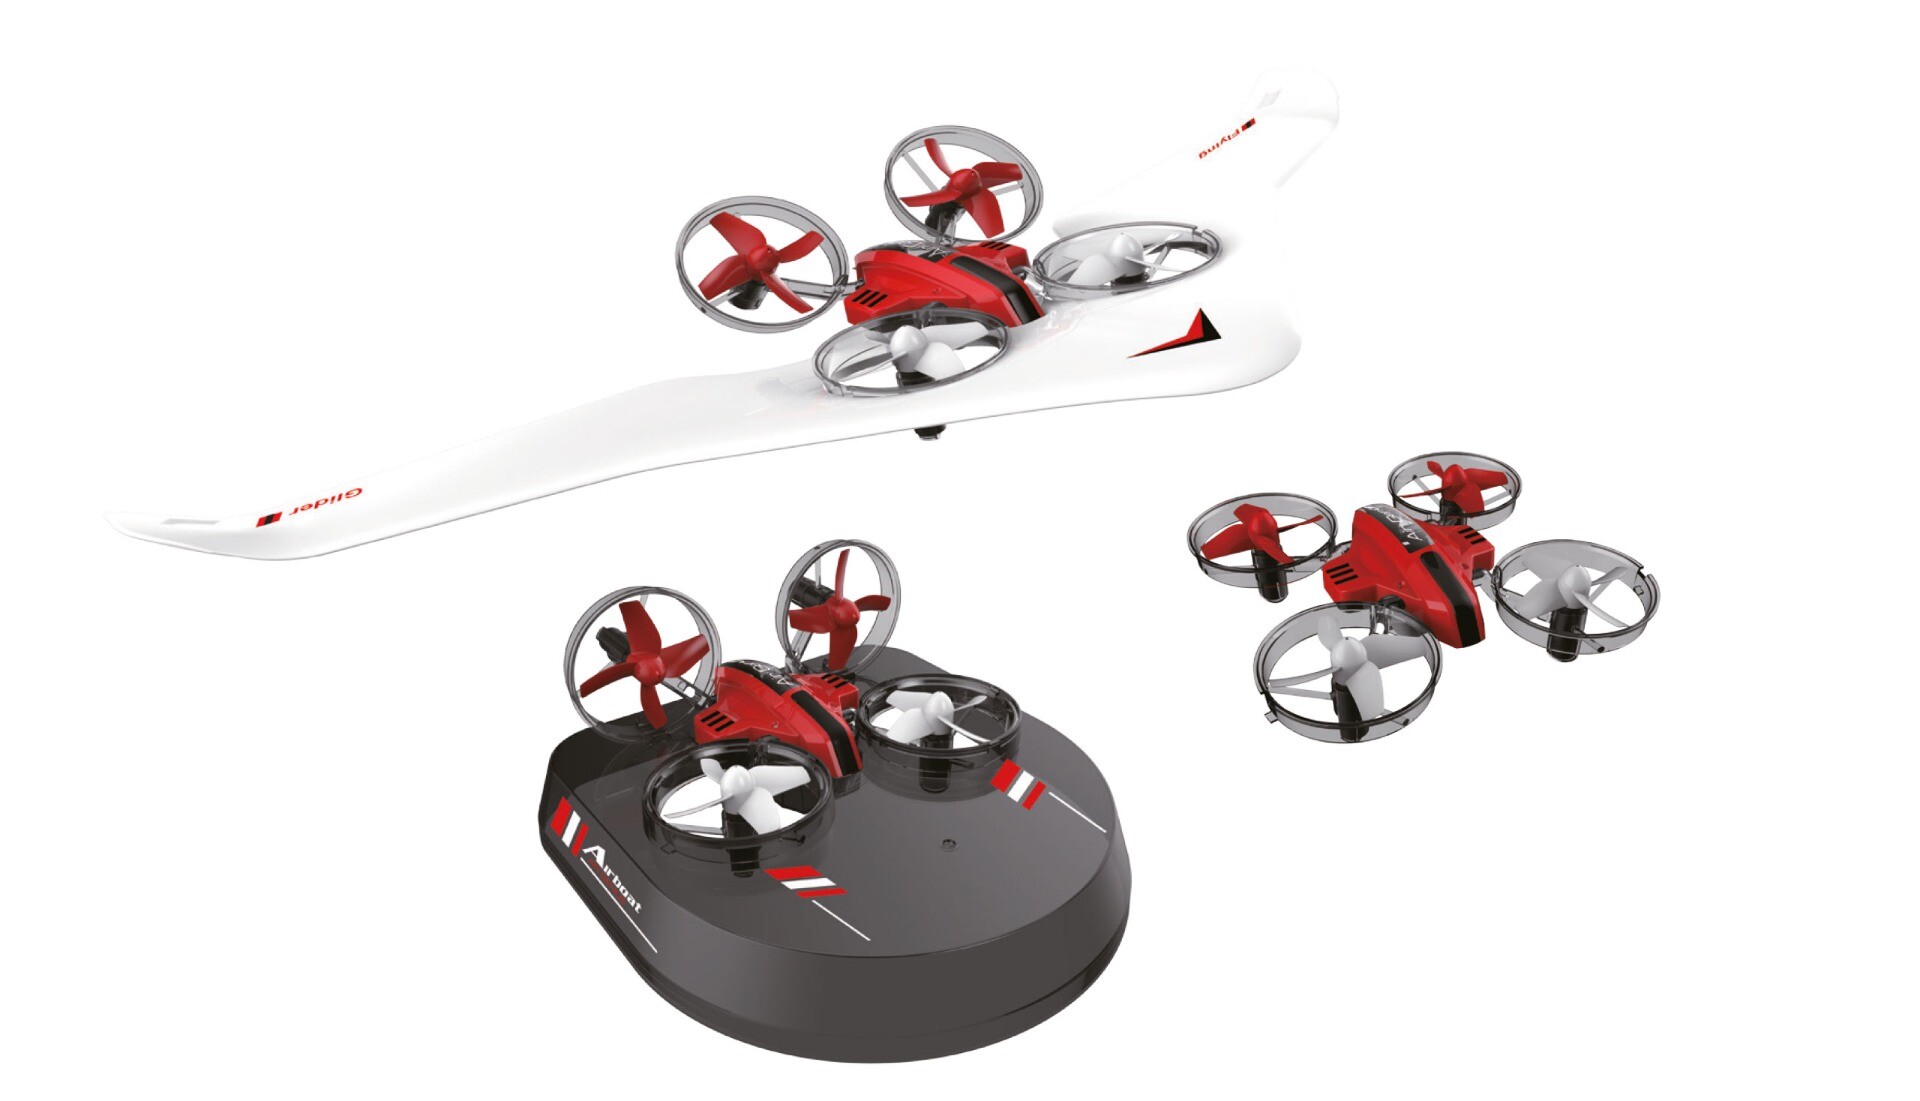 Amewi Air Genius 3-in-1 drone, hovercraft, vliegtuig